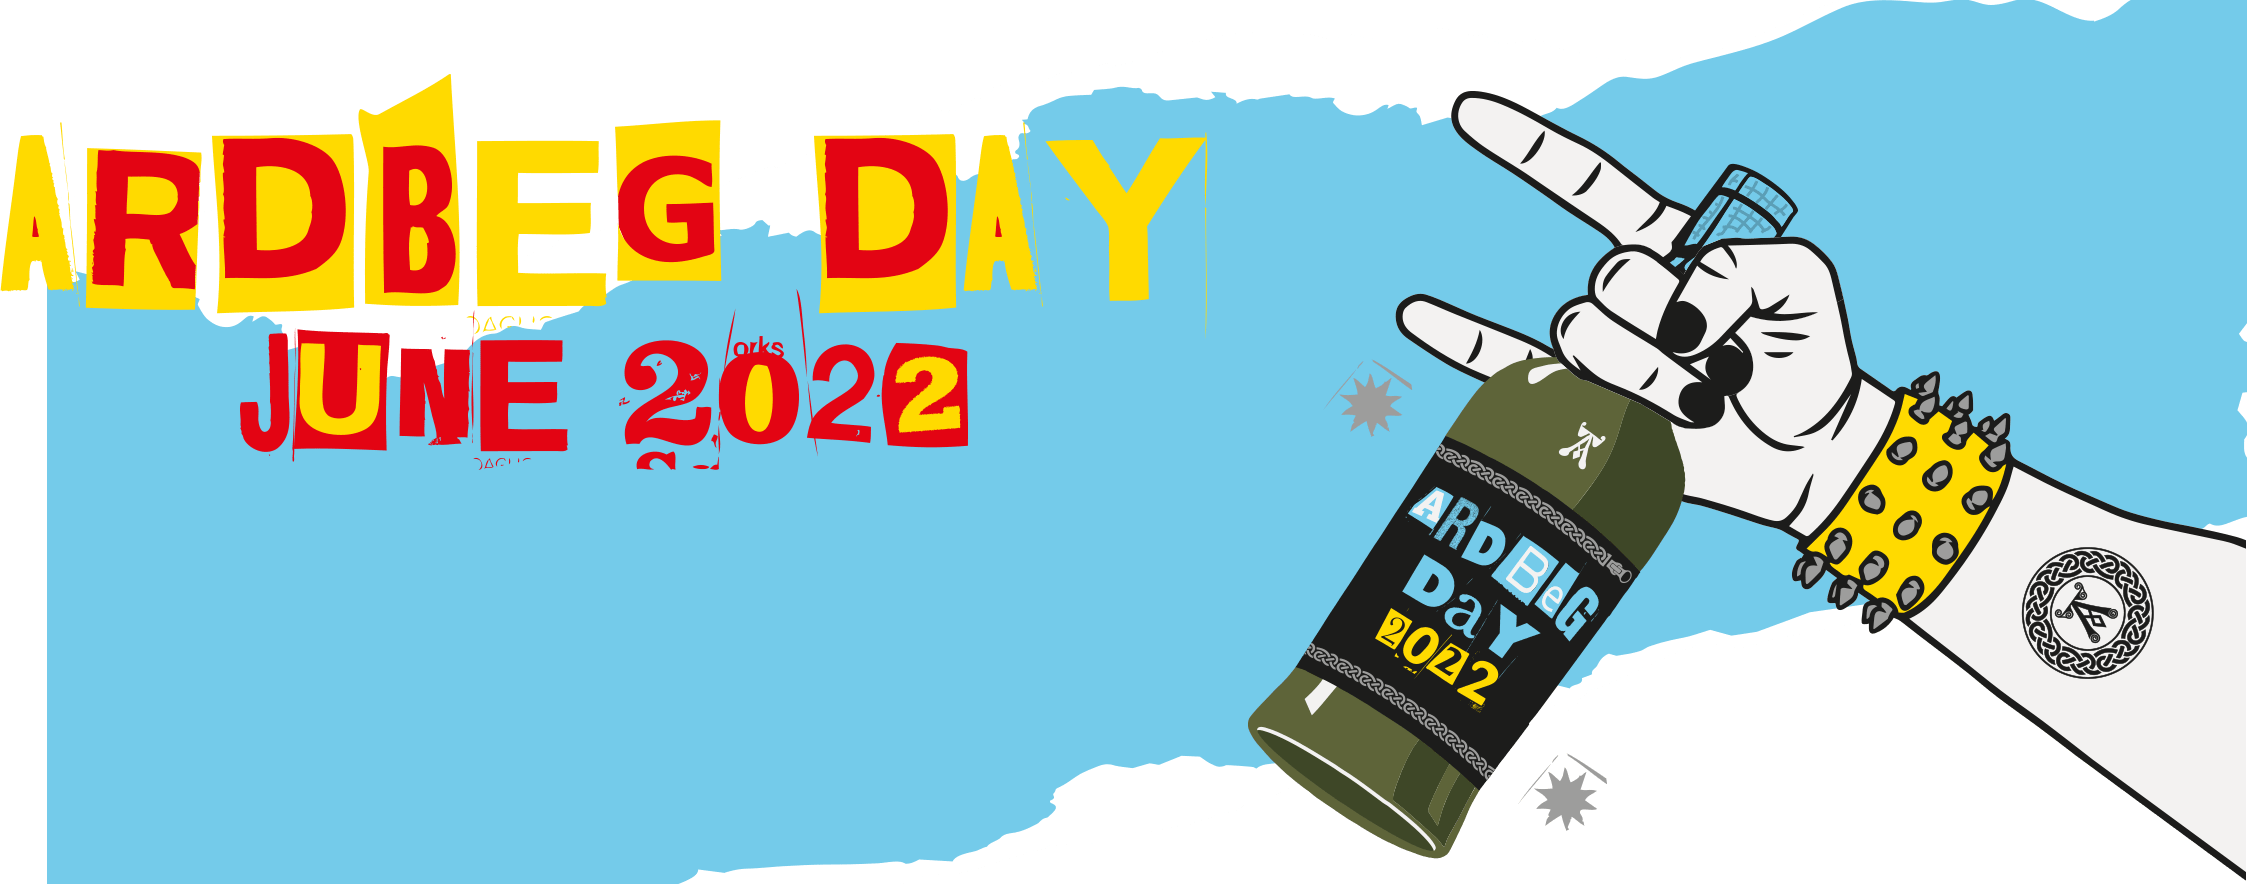 ARDBEG DAY 2022